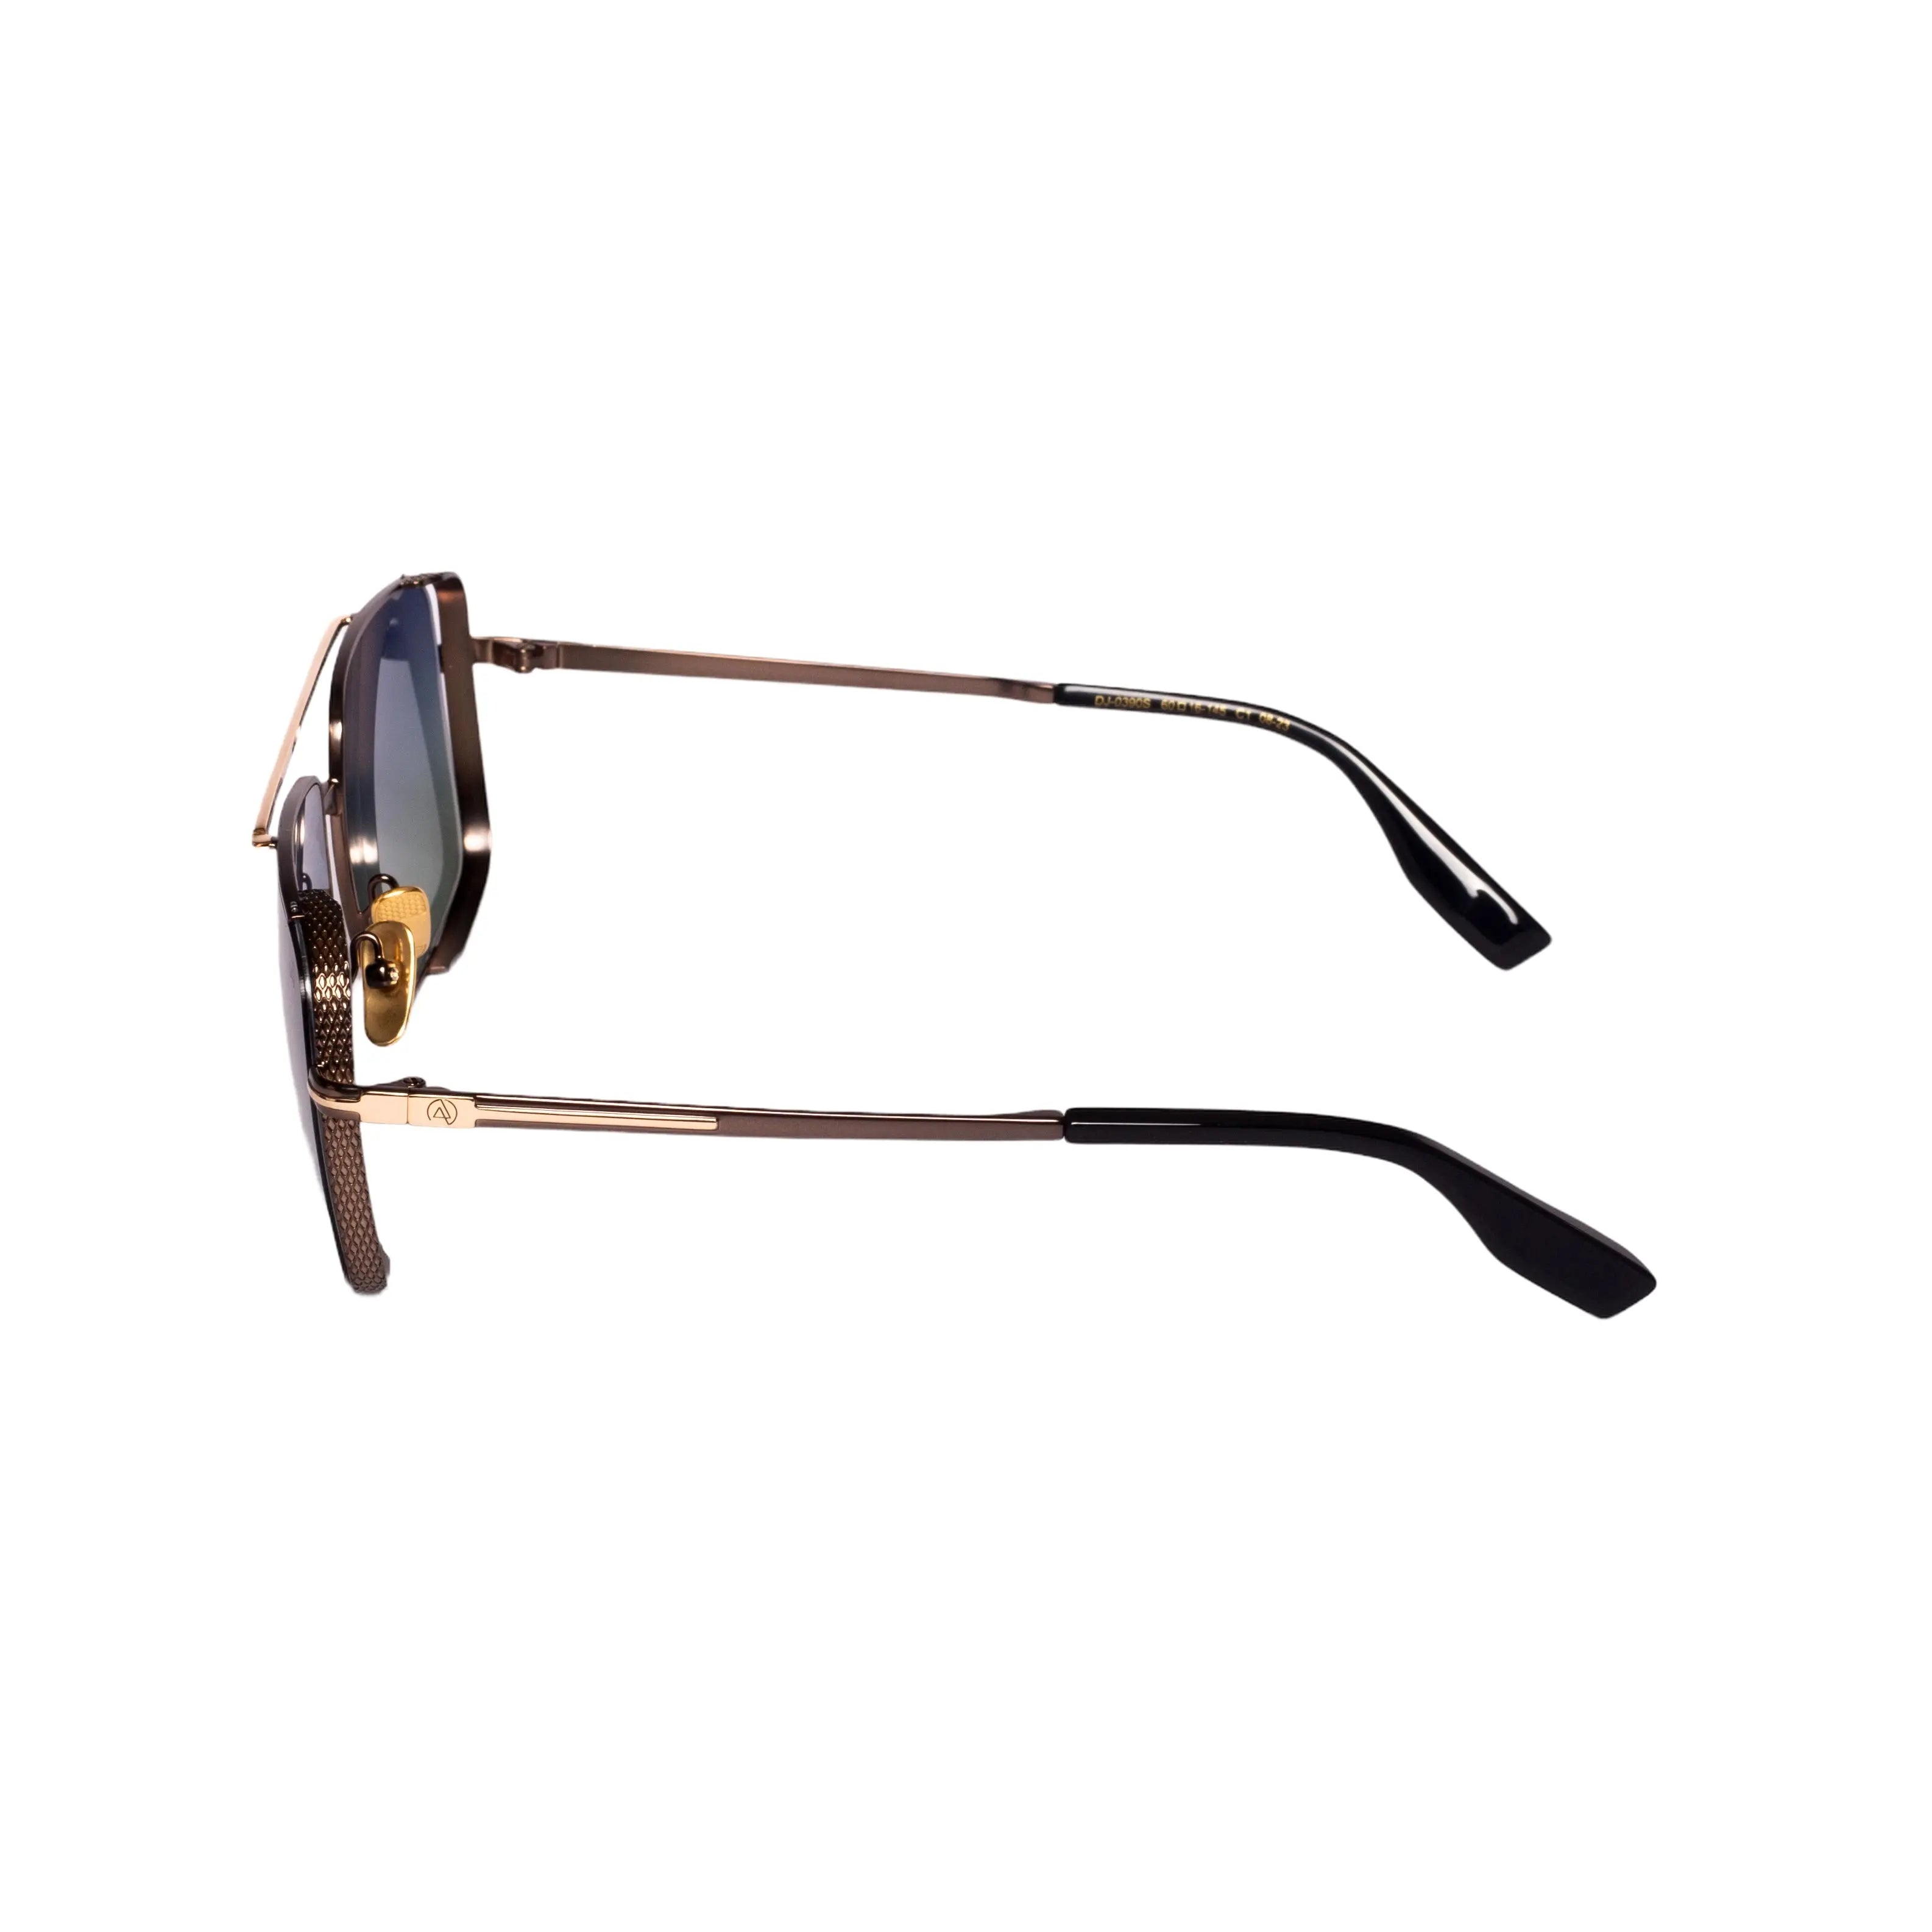 David Jones-DJ 0390-60-C3 Sunglasses - Premium Sunglasses from David Jones - Just Rs. 5490! Shop now at Laxmi Opticians